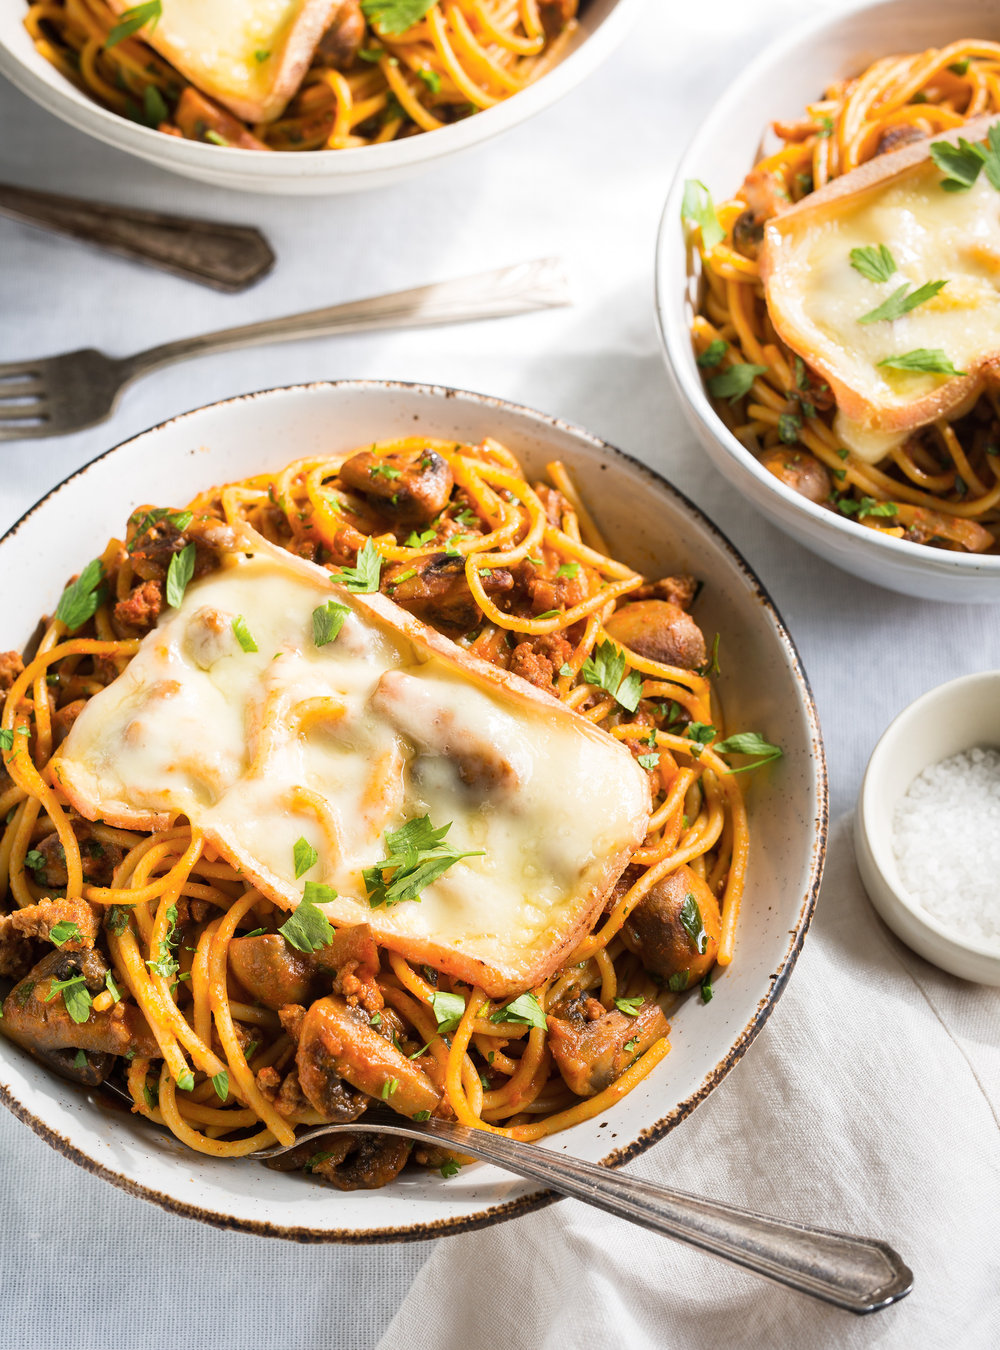 Spaghetti with Veal and Mushrooms au Gratin